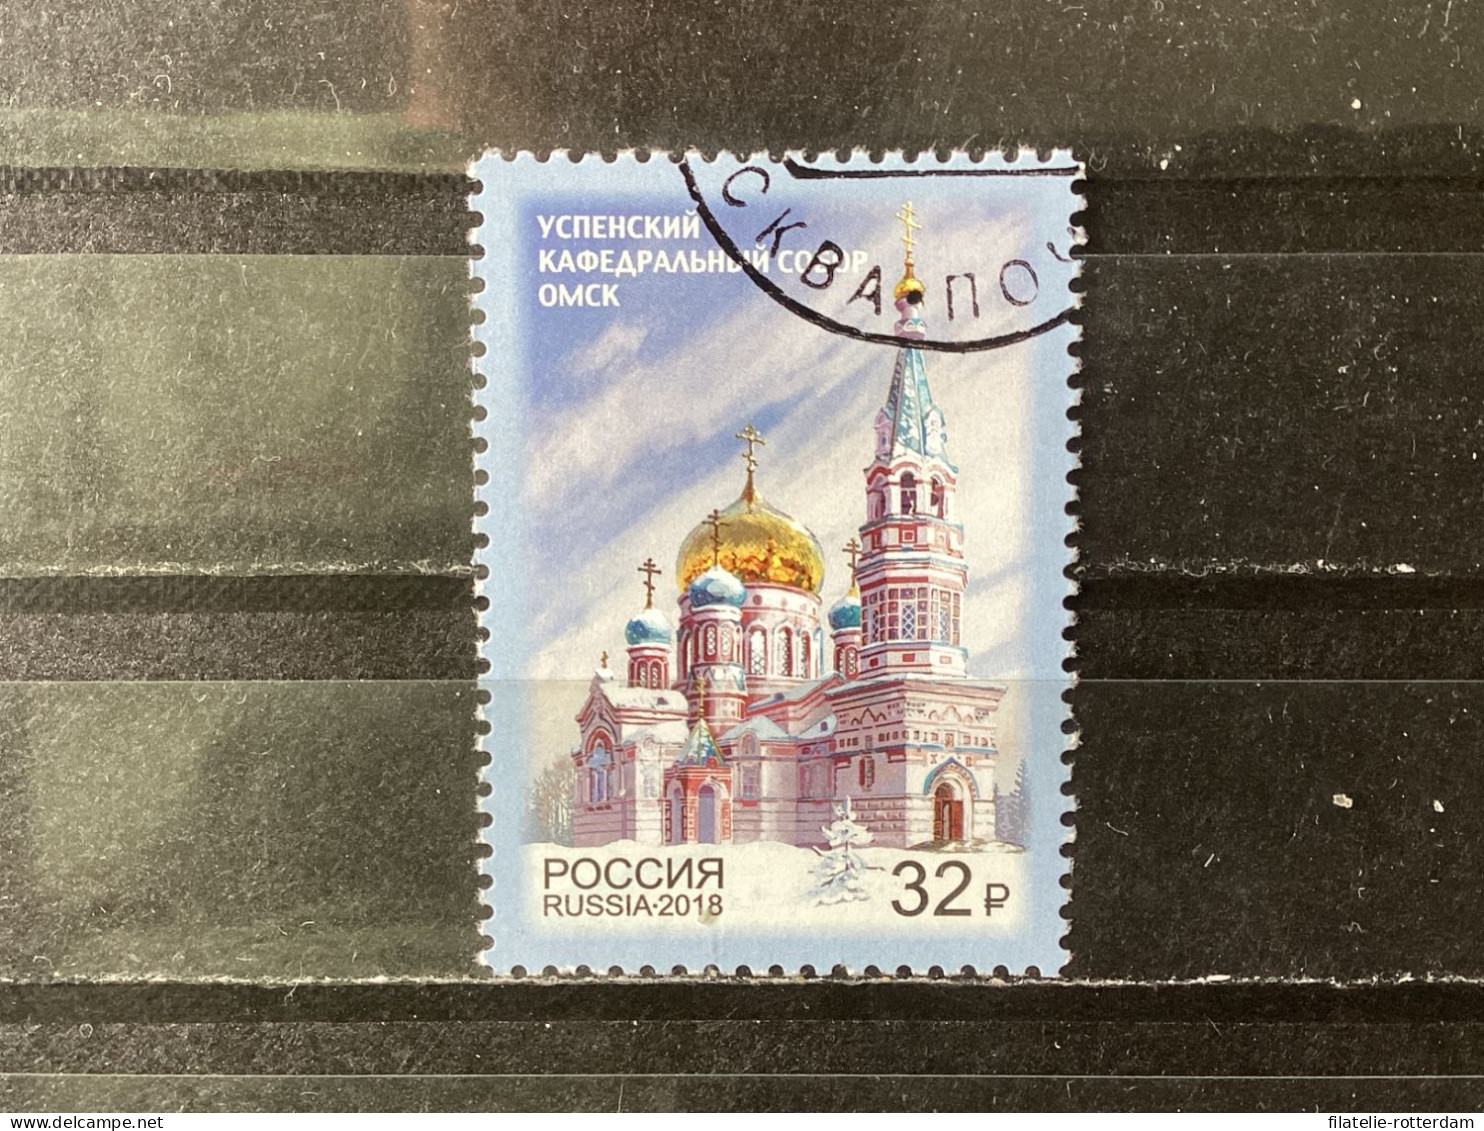 Russia / Rusland - Assumption Cathedral, Omsk (32) 2018 - Oblitérés